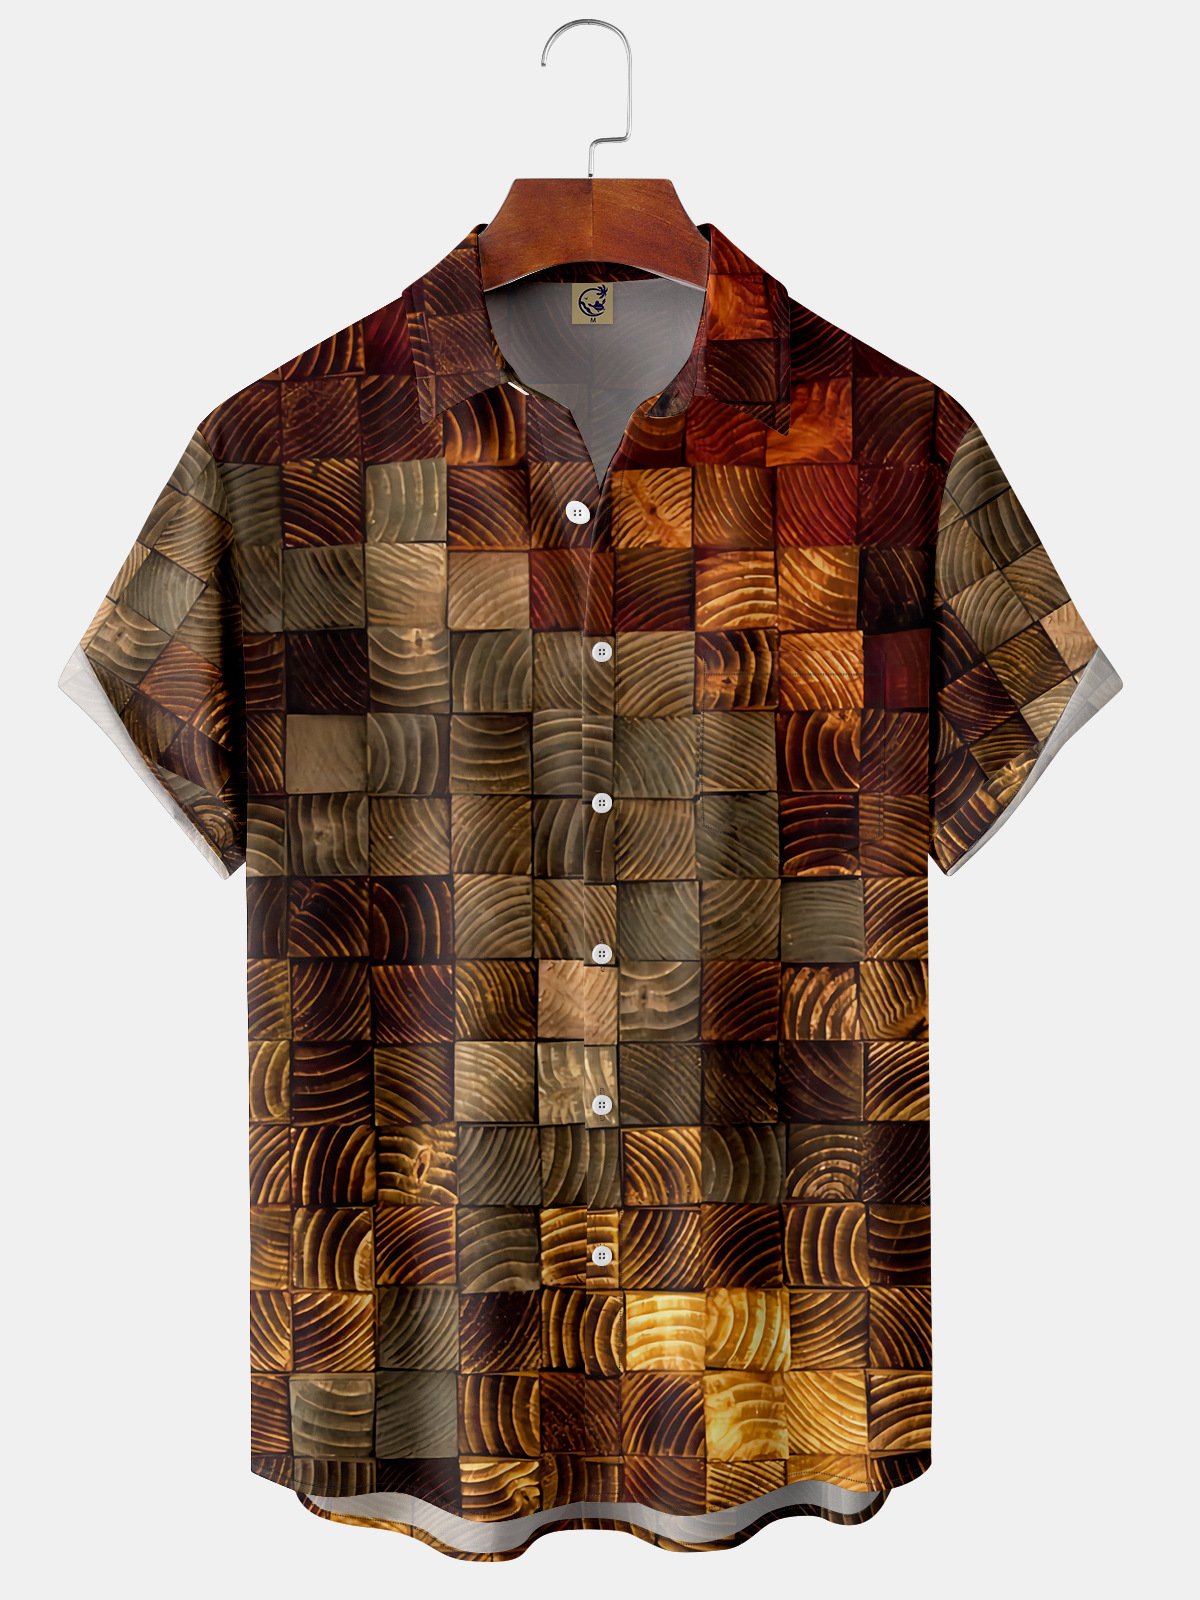 Hardaddy Distressed Wood Grain Chest Pocket Short Sleeve Casual Shirt